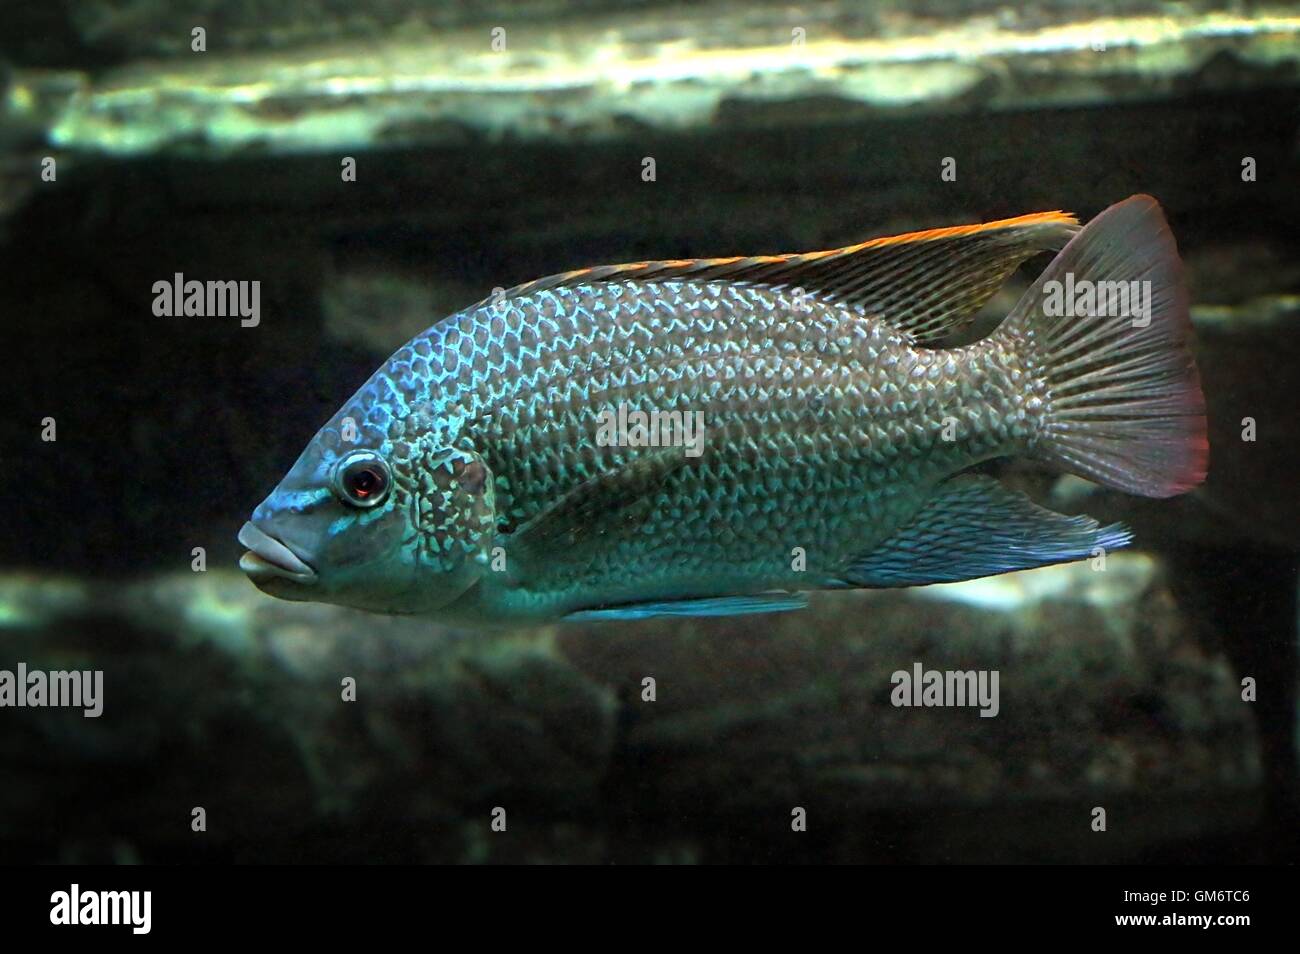 Oreochromis tanganicae or Tanganyikan Tilapia, a cichlid fish endemic to the Great African Lake Tanganyika Stock Photo